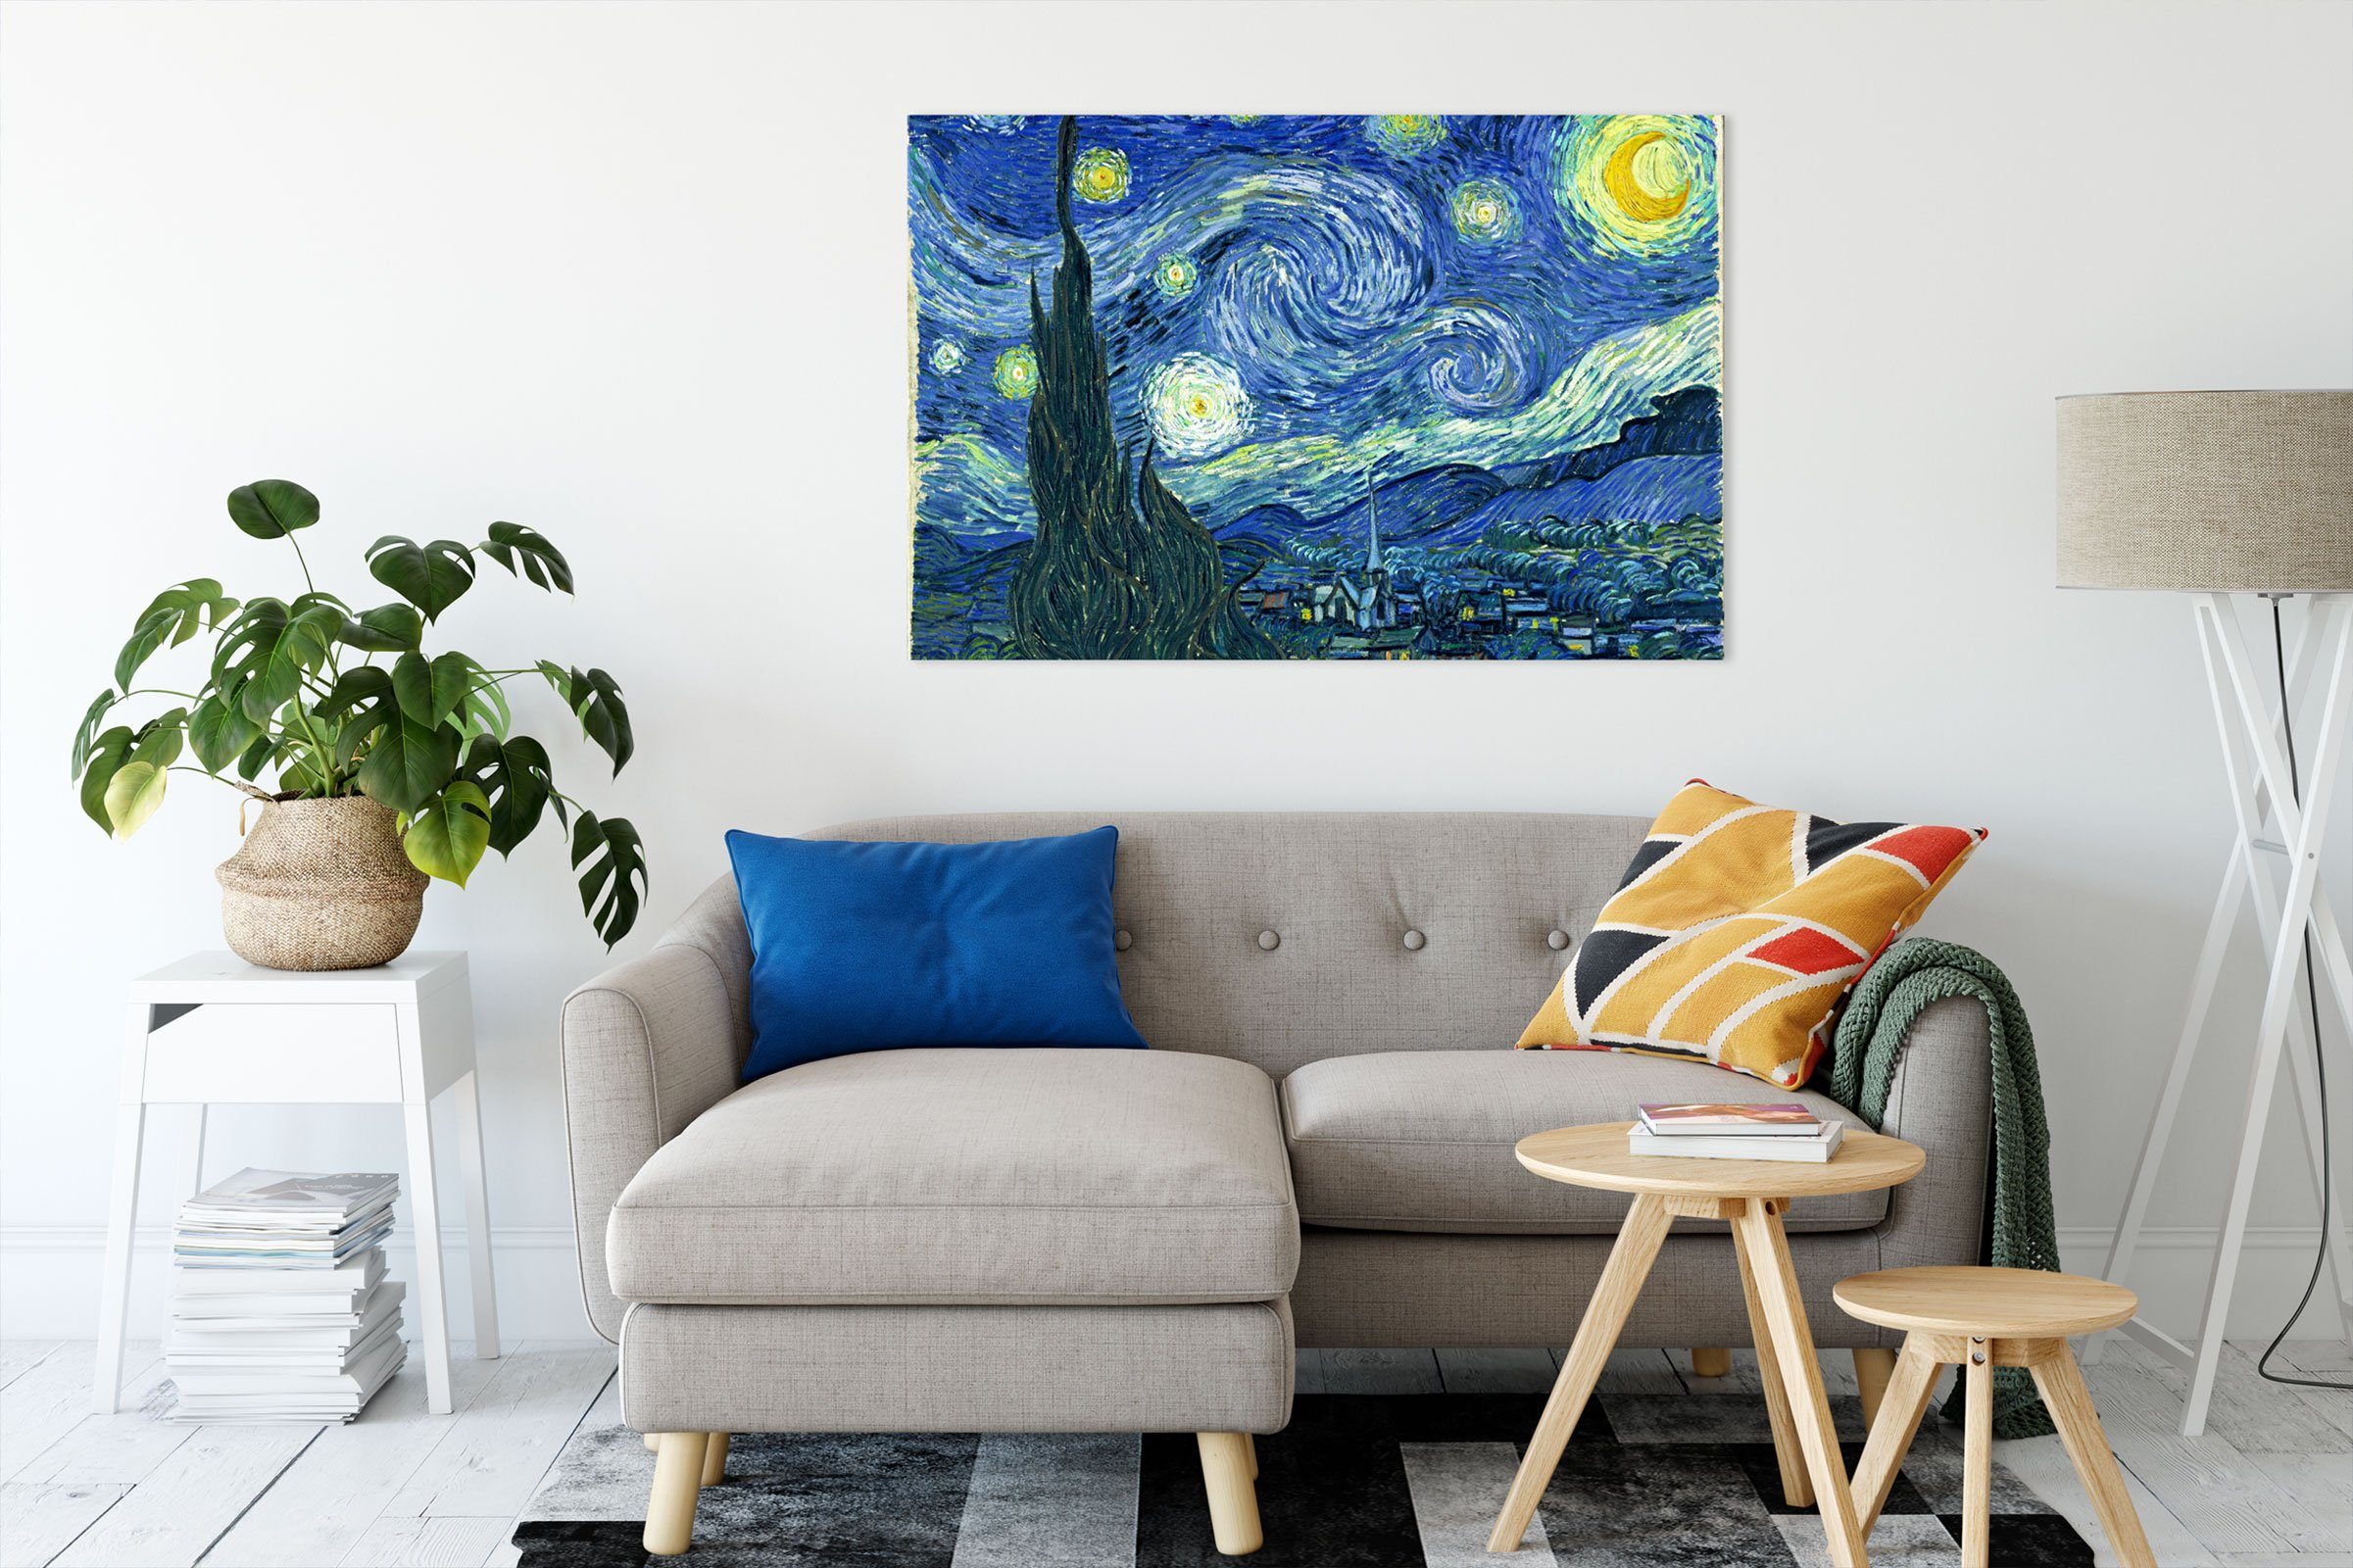 Vincent bespannt, inkl. Leinwandbild Van Die Gogh St), Die Pixxprint fertig Zackenaufhänger Sternennacht, (1 Sternennacht Van Leinwandbild Vincent Gogh - -